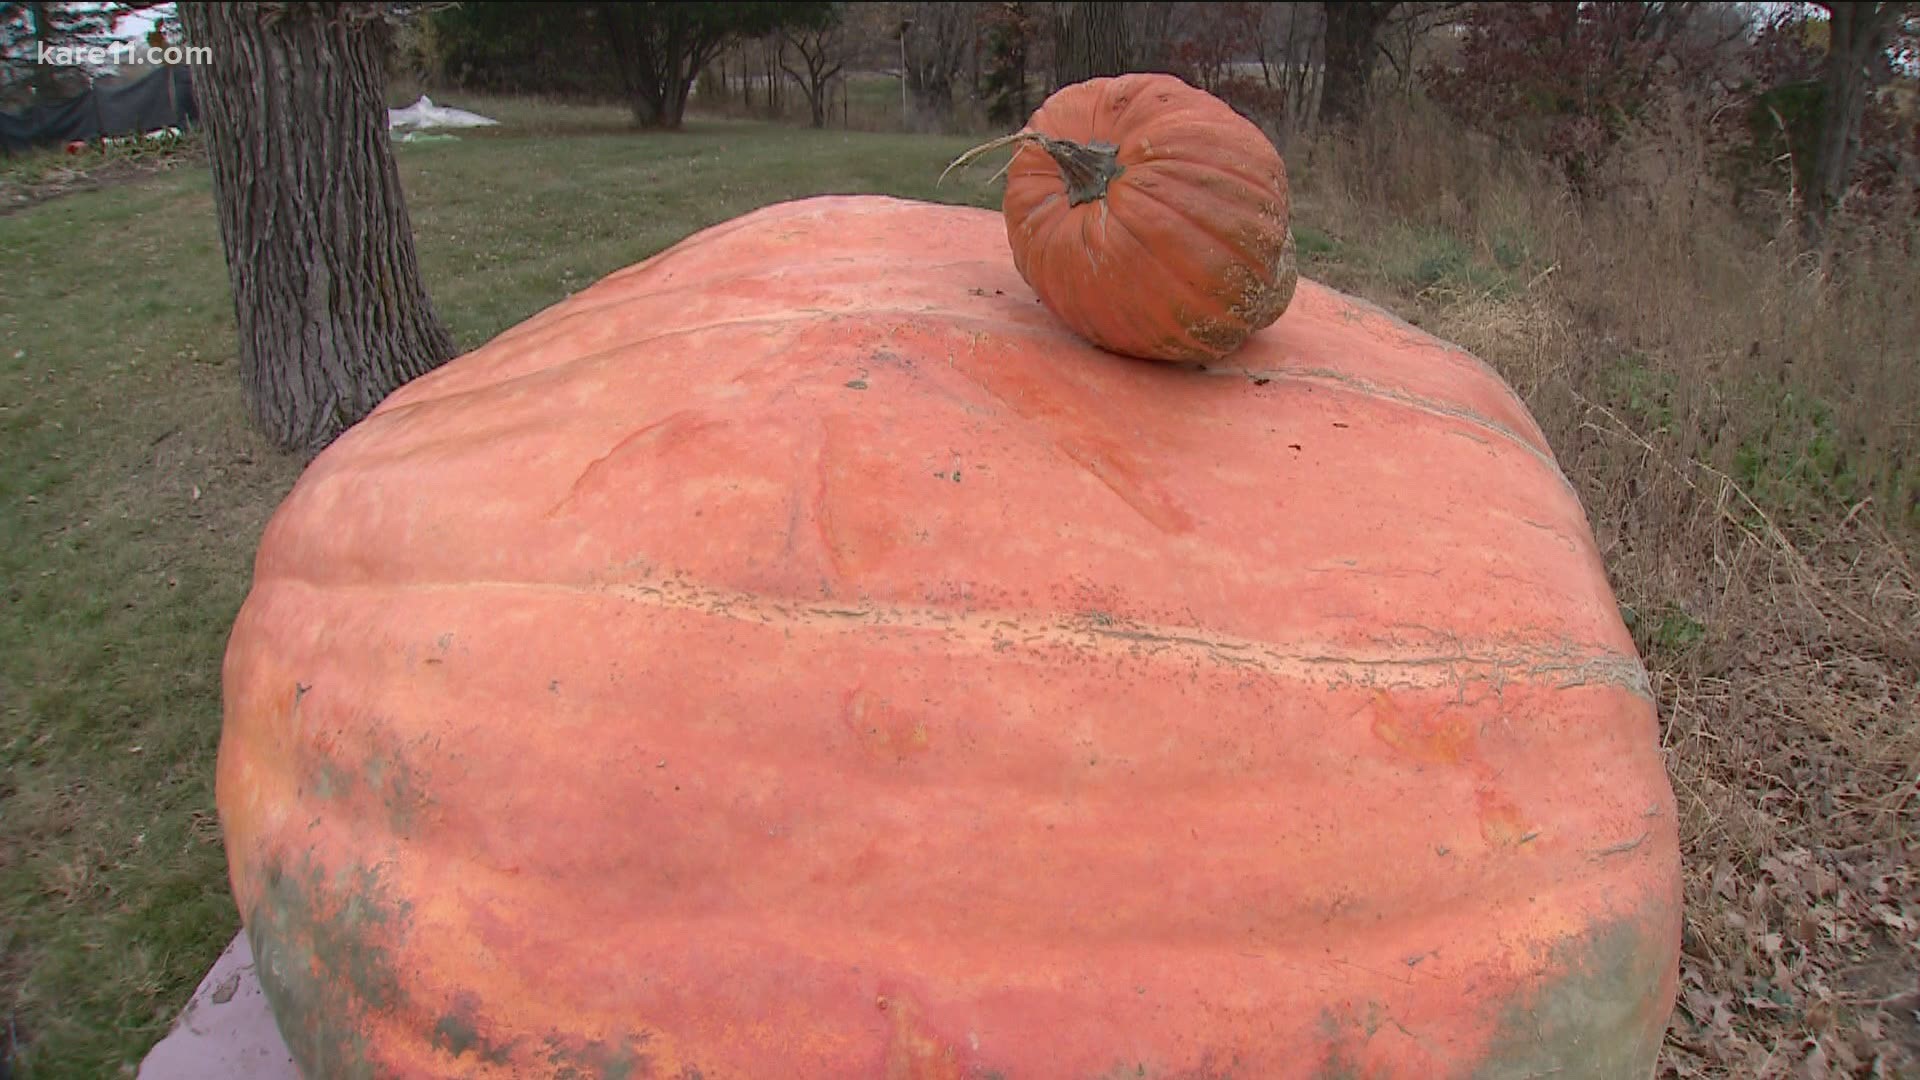 Travis Gienger's pumpkin, Tiger King, clocked in at 2,350 pounds.